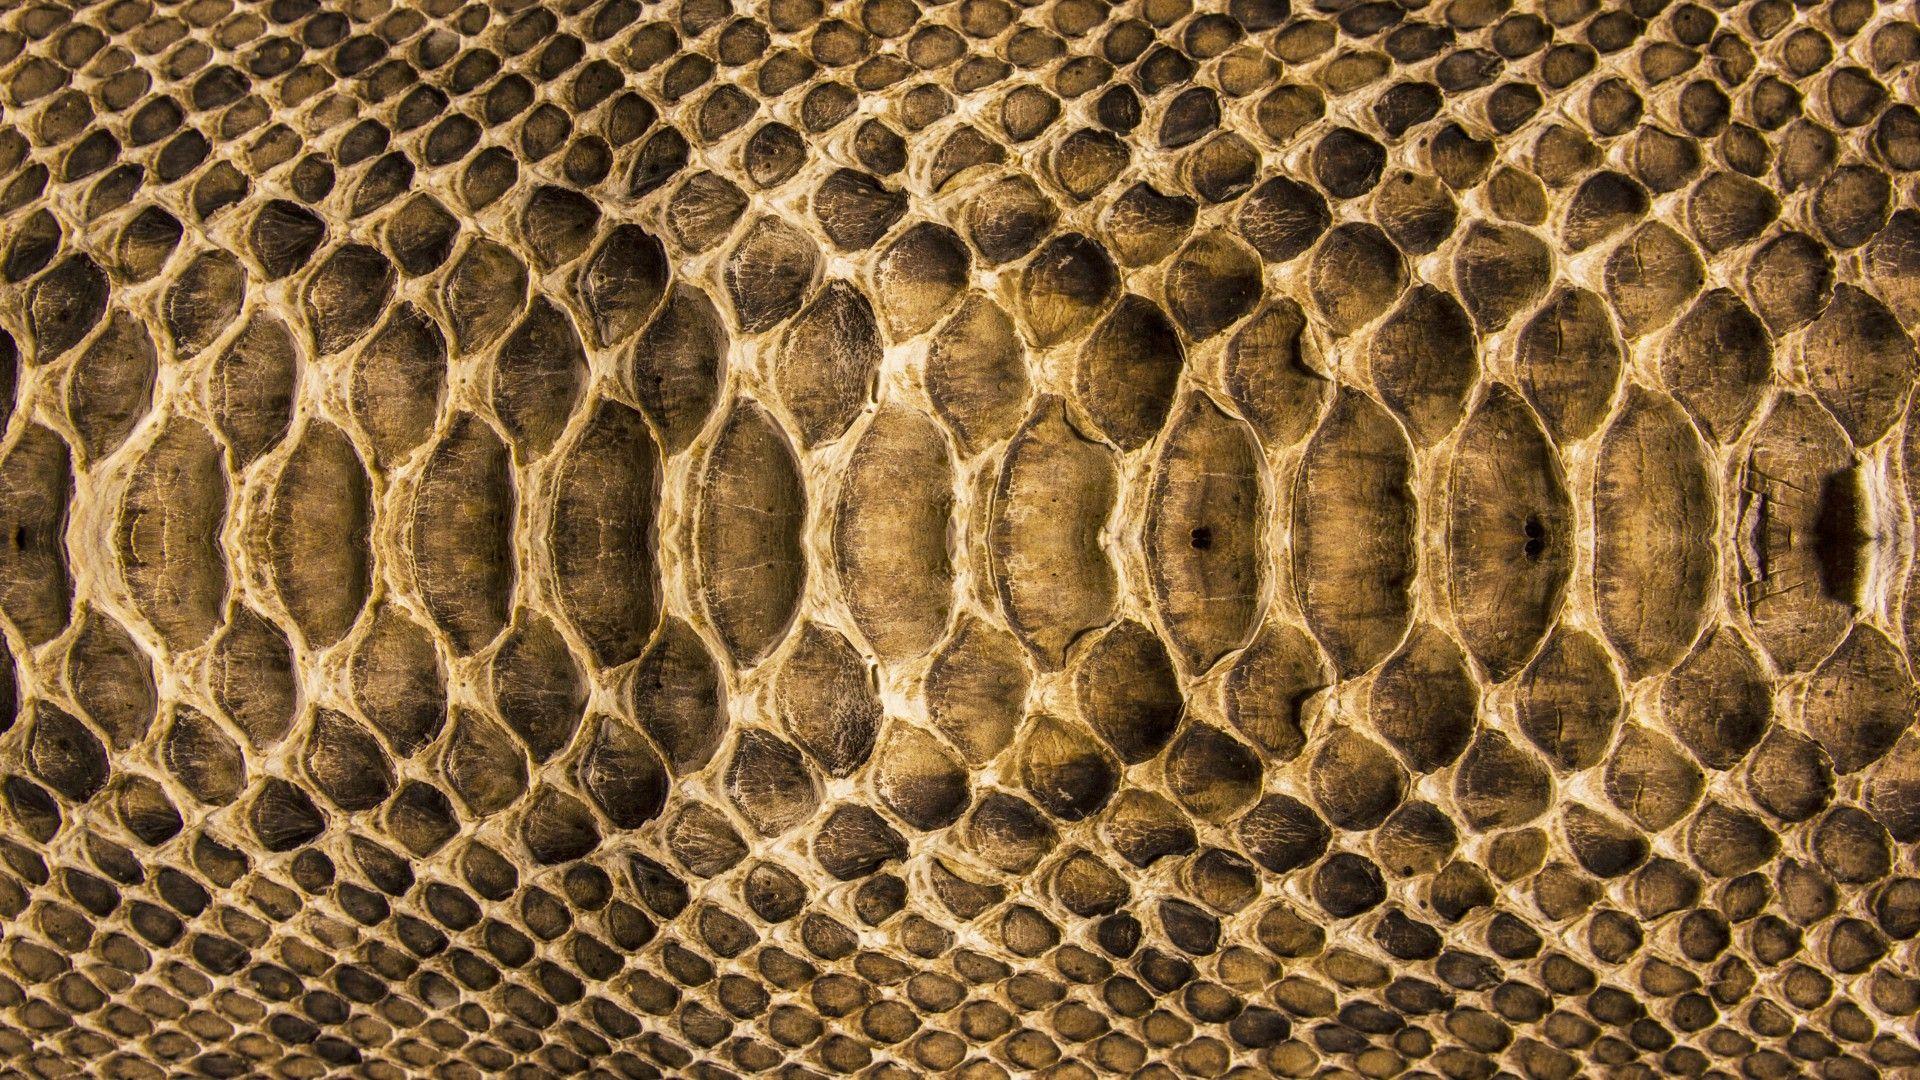 Snake Skin Wallpaper, Find best latest Snake Skin Wallpaper in HD for your PC desktop background & mobile phones. Snake wallpaper, Snake skin, Animal skin